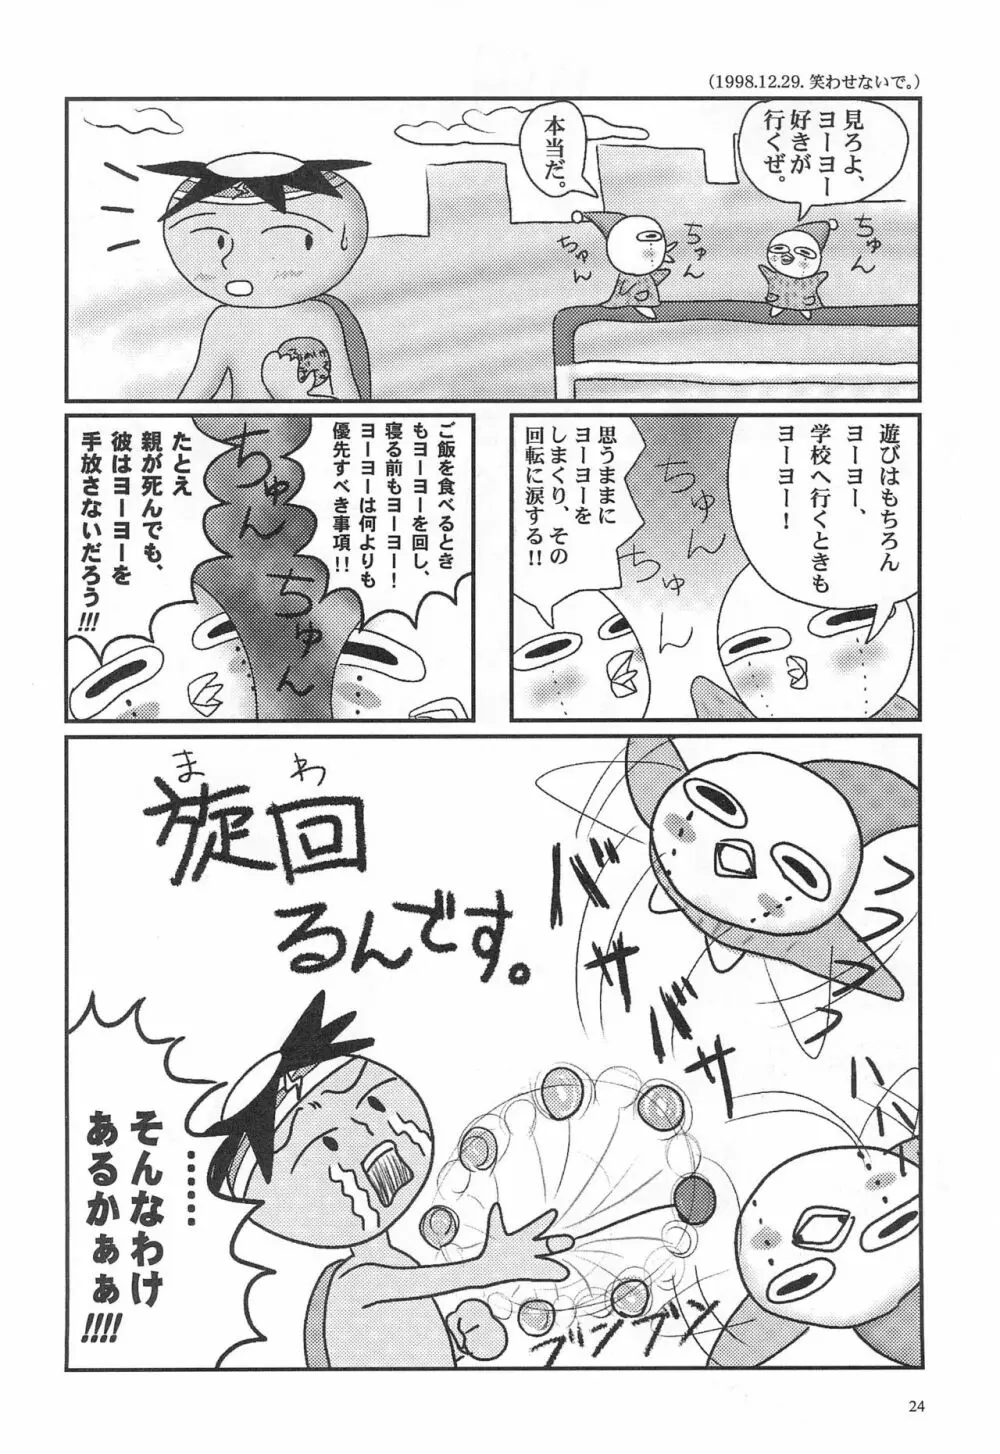 閃虹丸作品集 Vol.1 24ページ